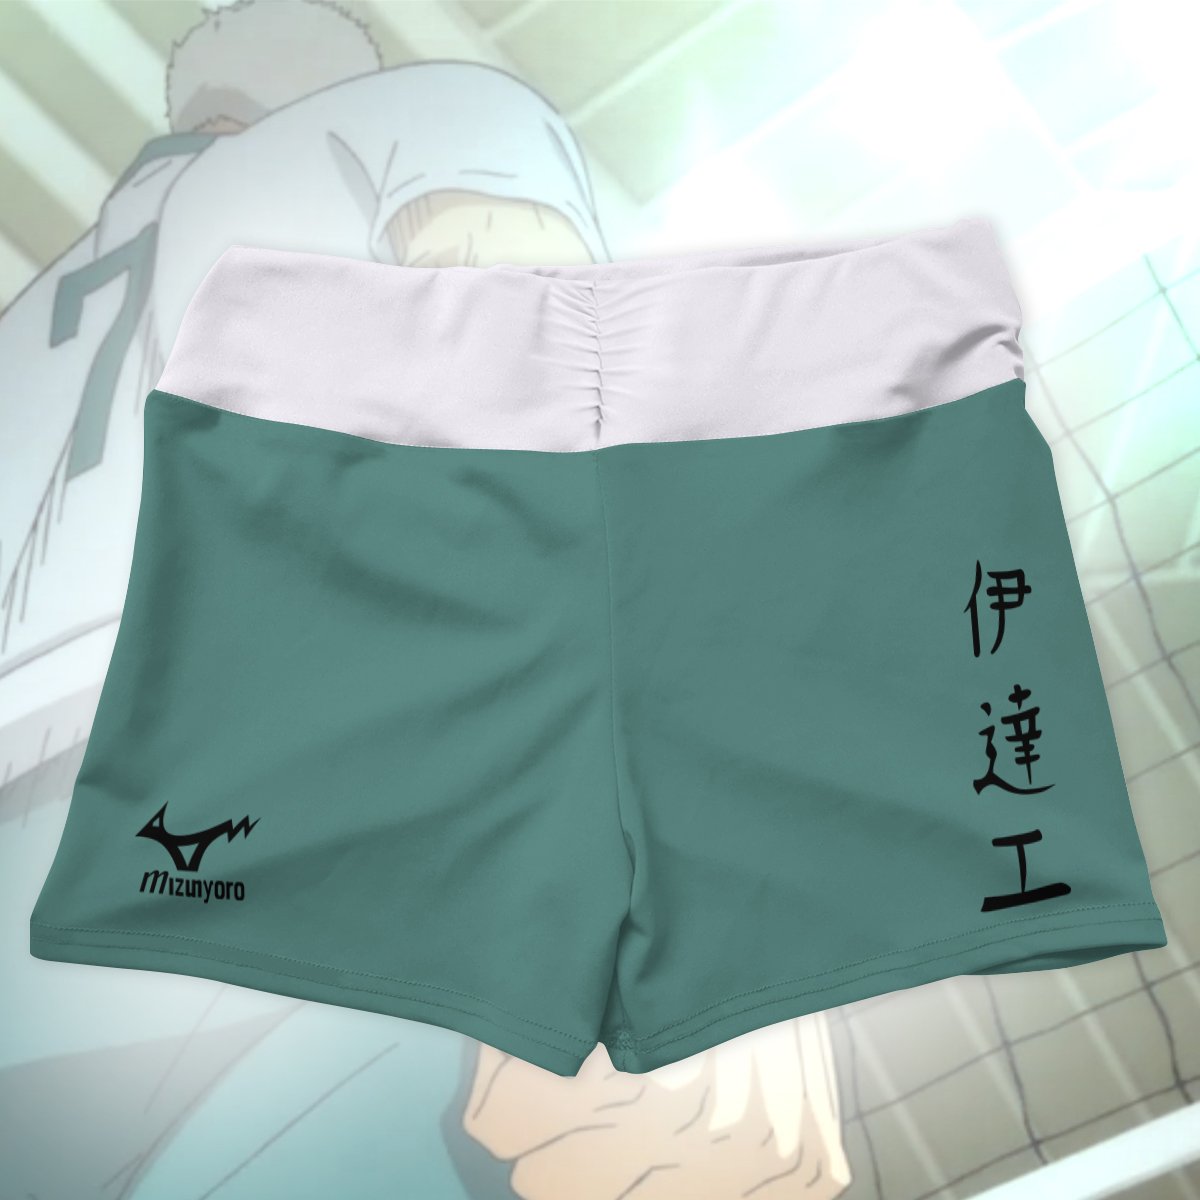 team datekou active wear set 383241 - Anime Swimsuits